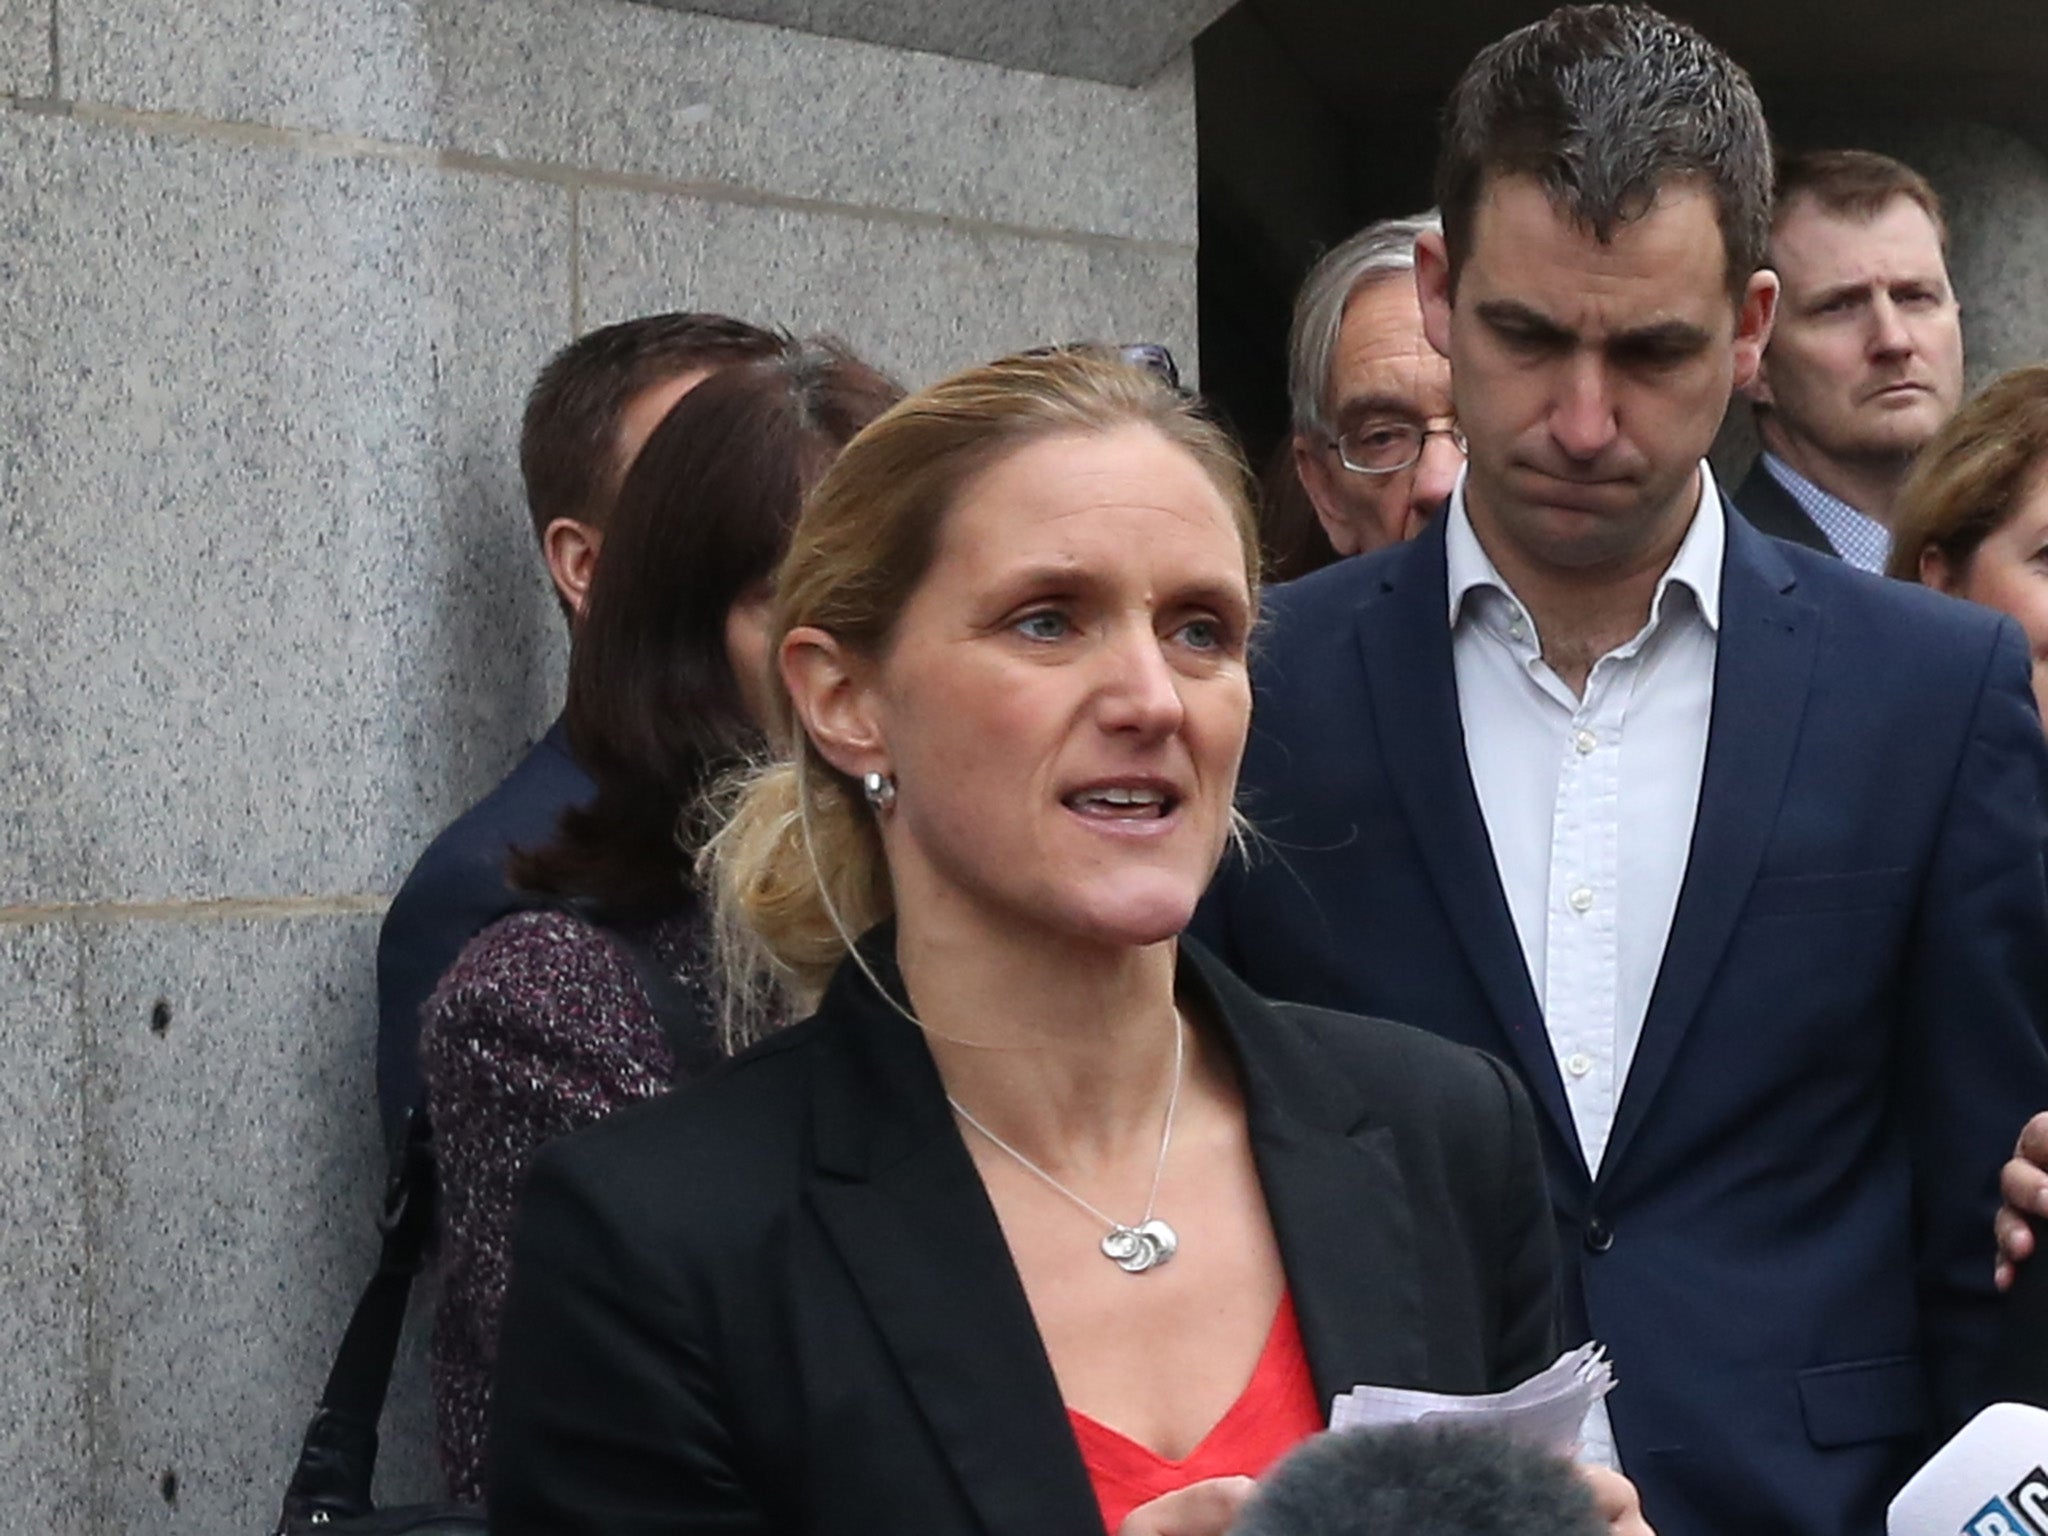 Jo Cox's sister Kim Leadbeater speaking alongside Cox's widower, Brendan, during the trial of the MPs killer in November 2016